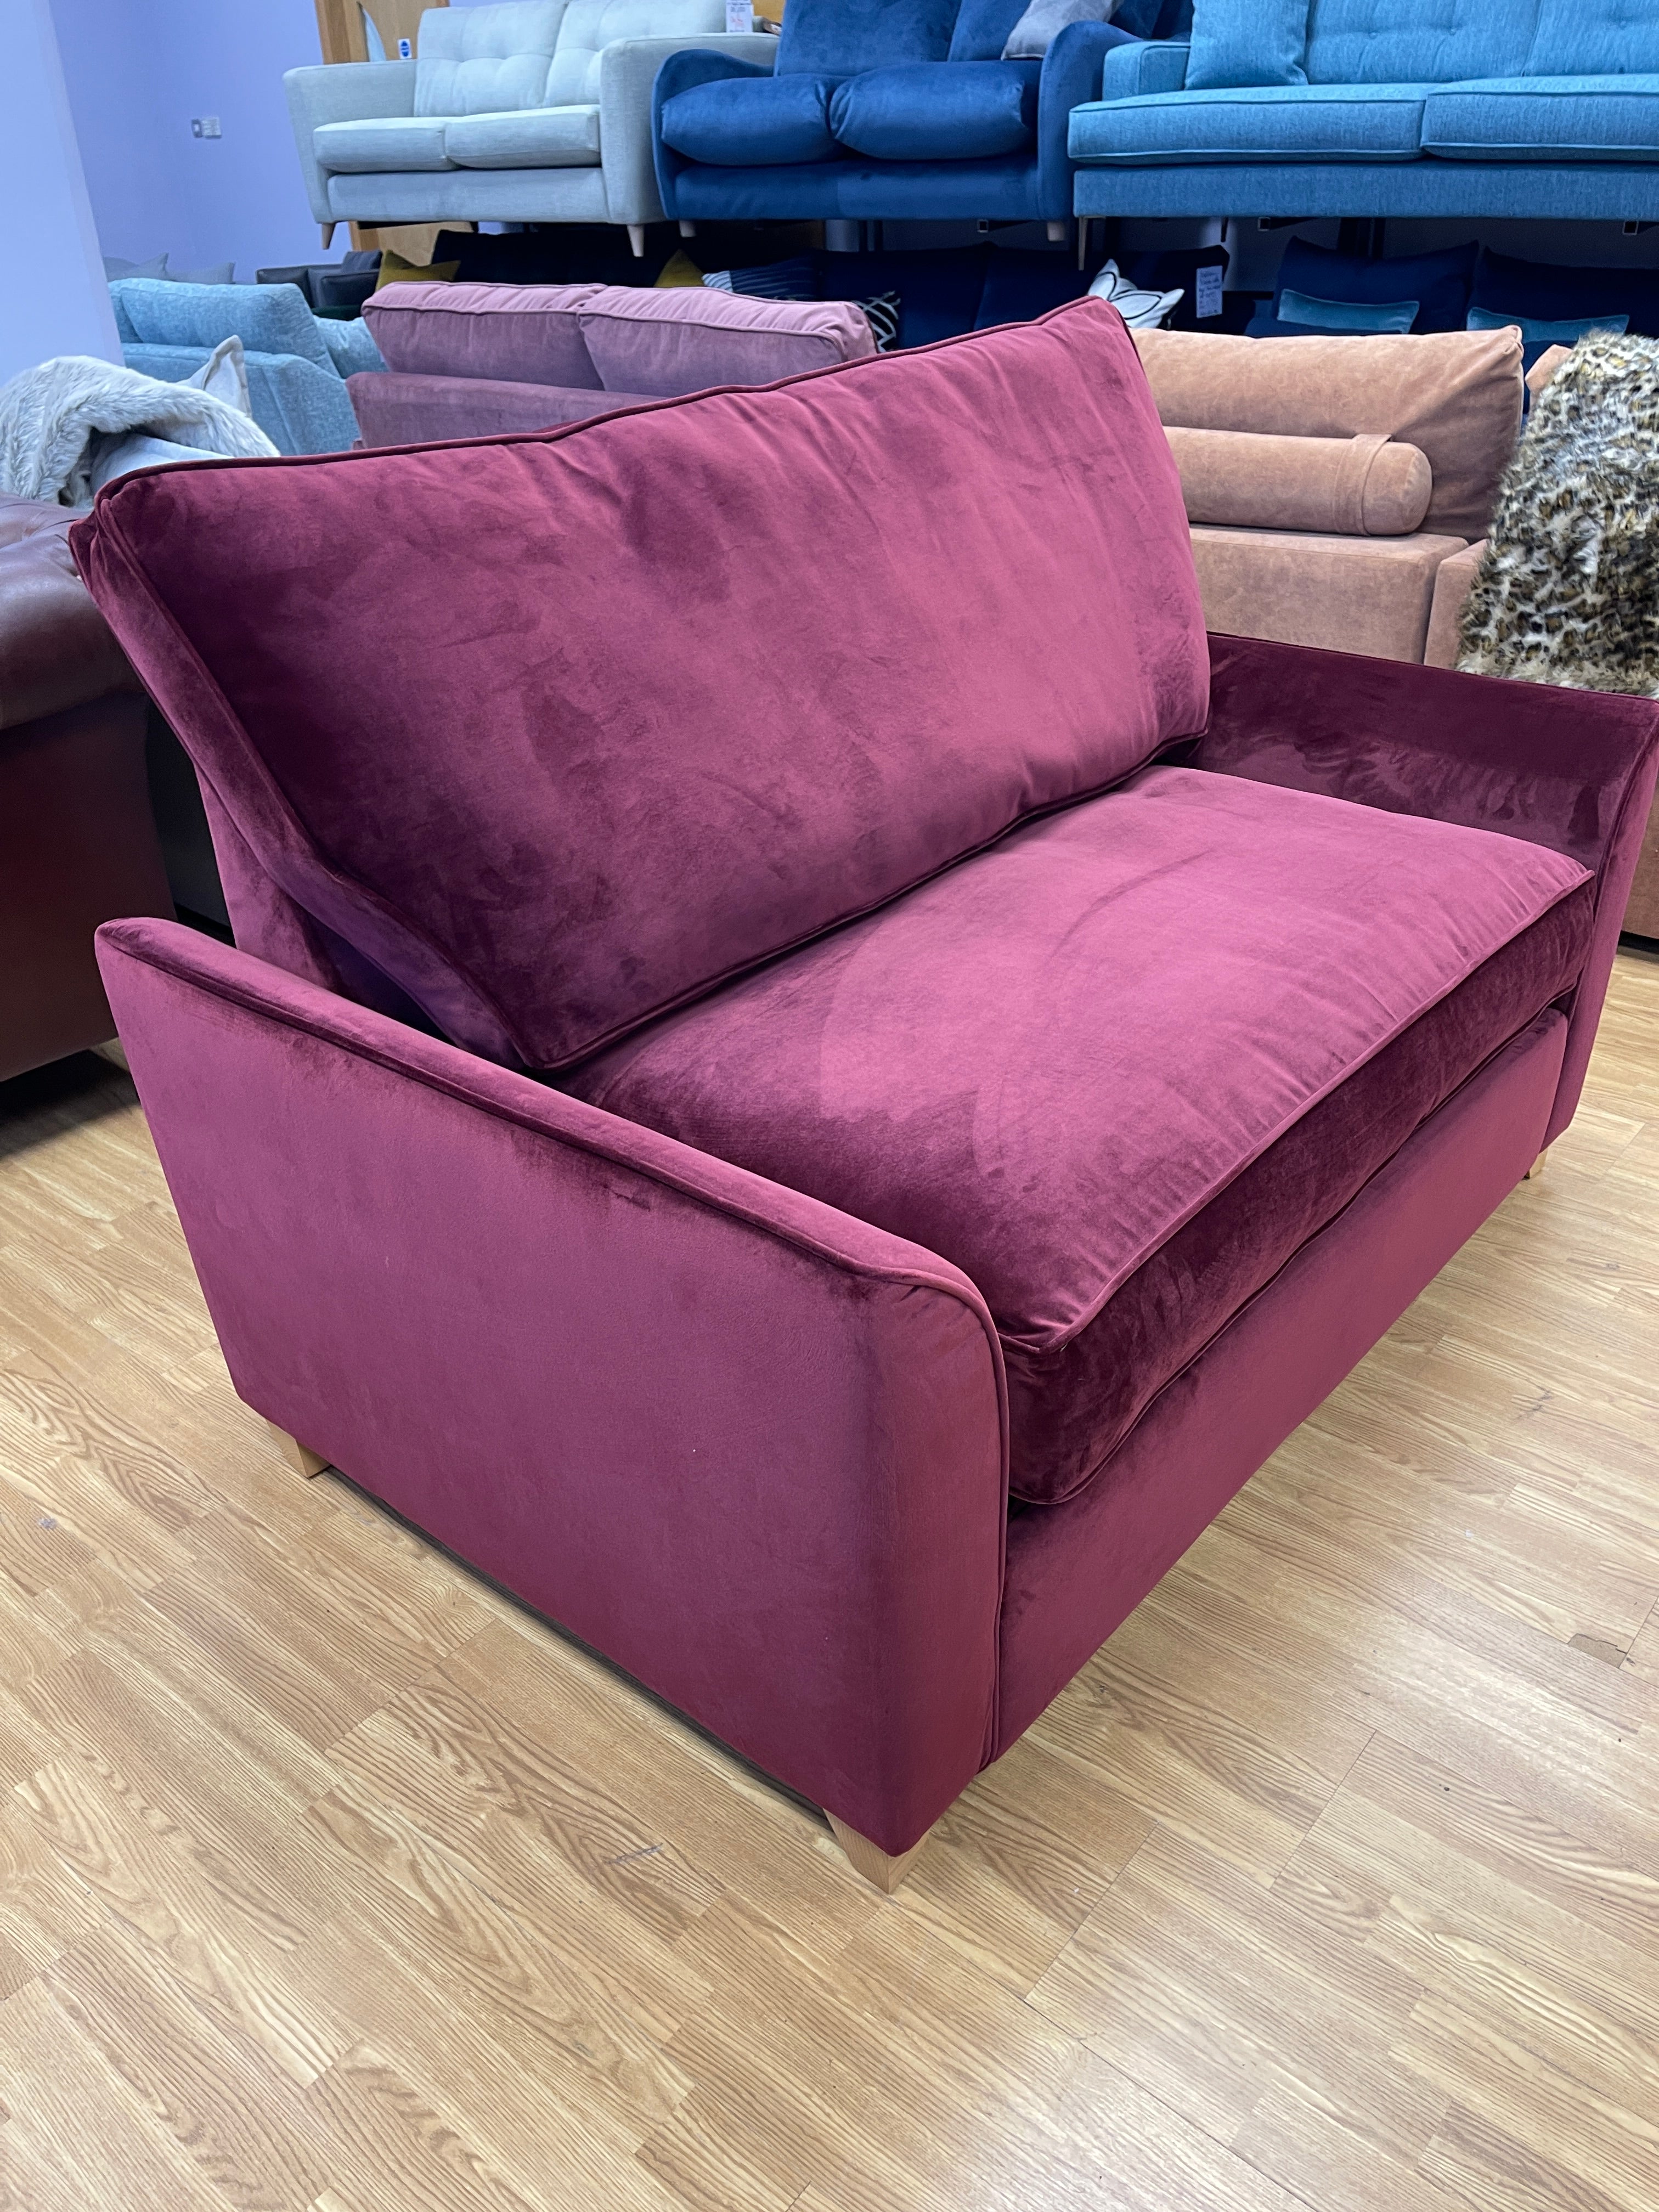 WILLOW & HALL EDINGTON Loveseat with sofa bed with single mattress cranberry / burgundy velvet